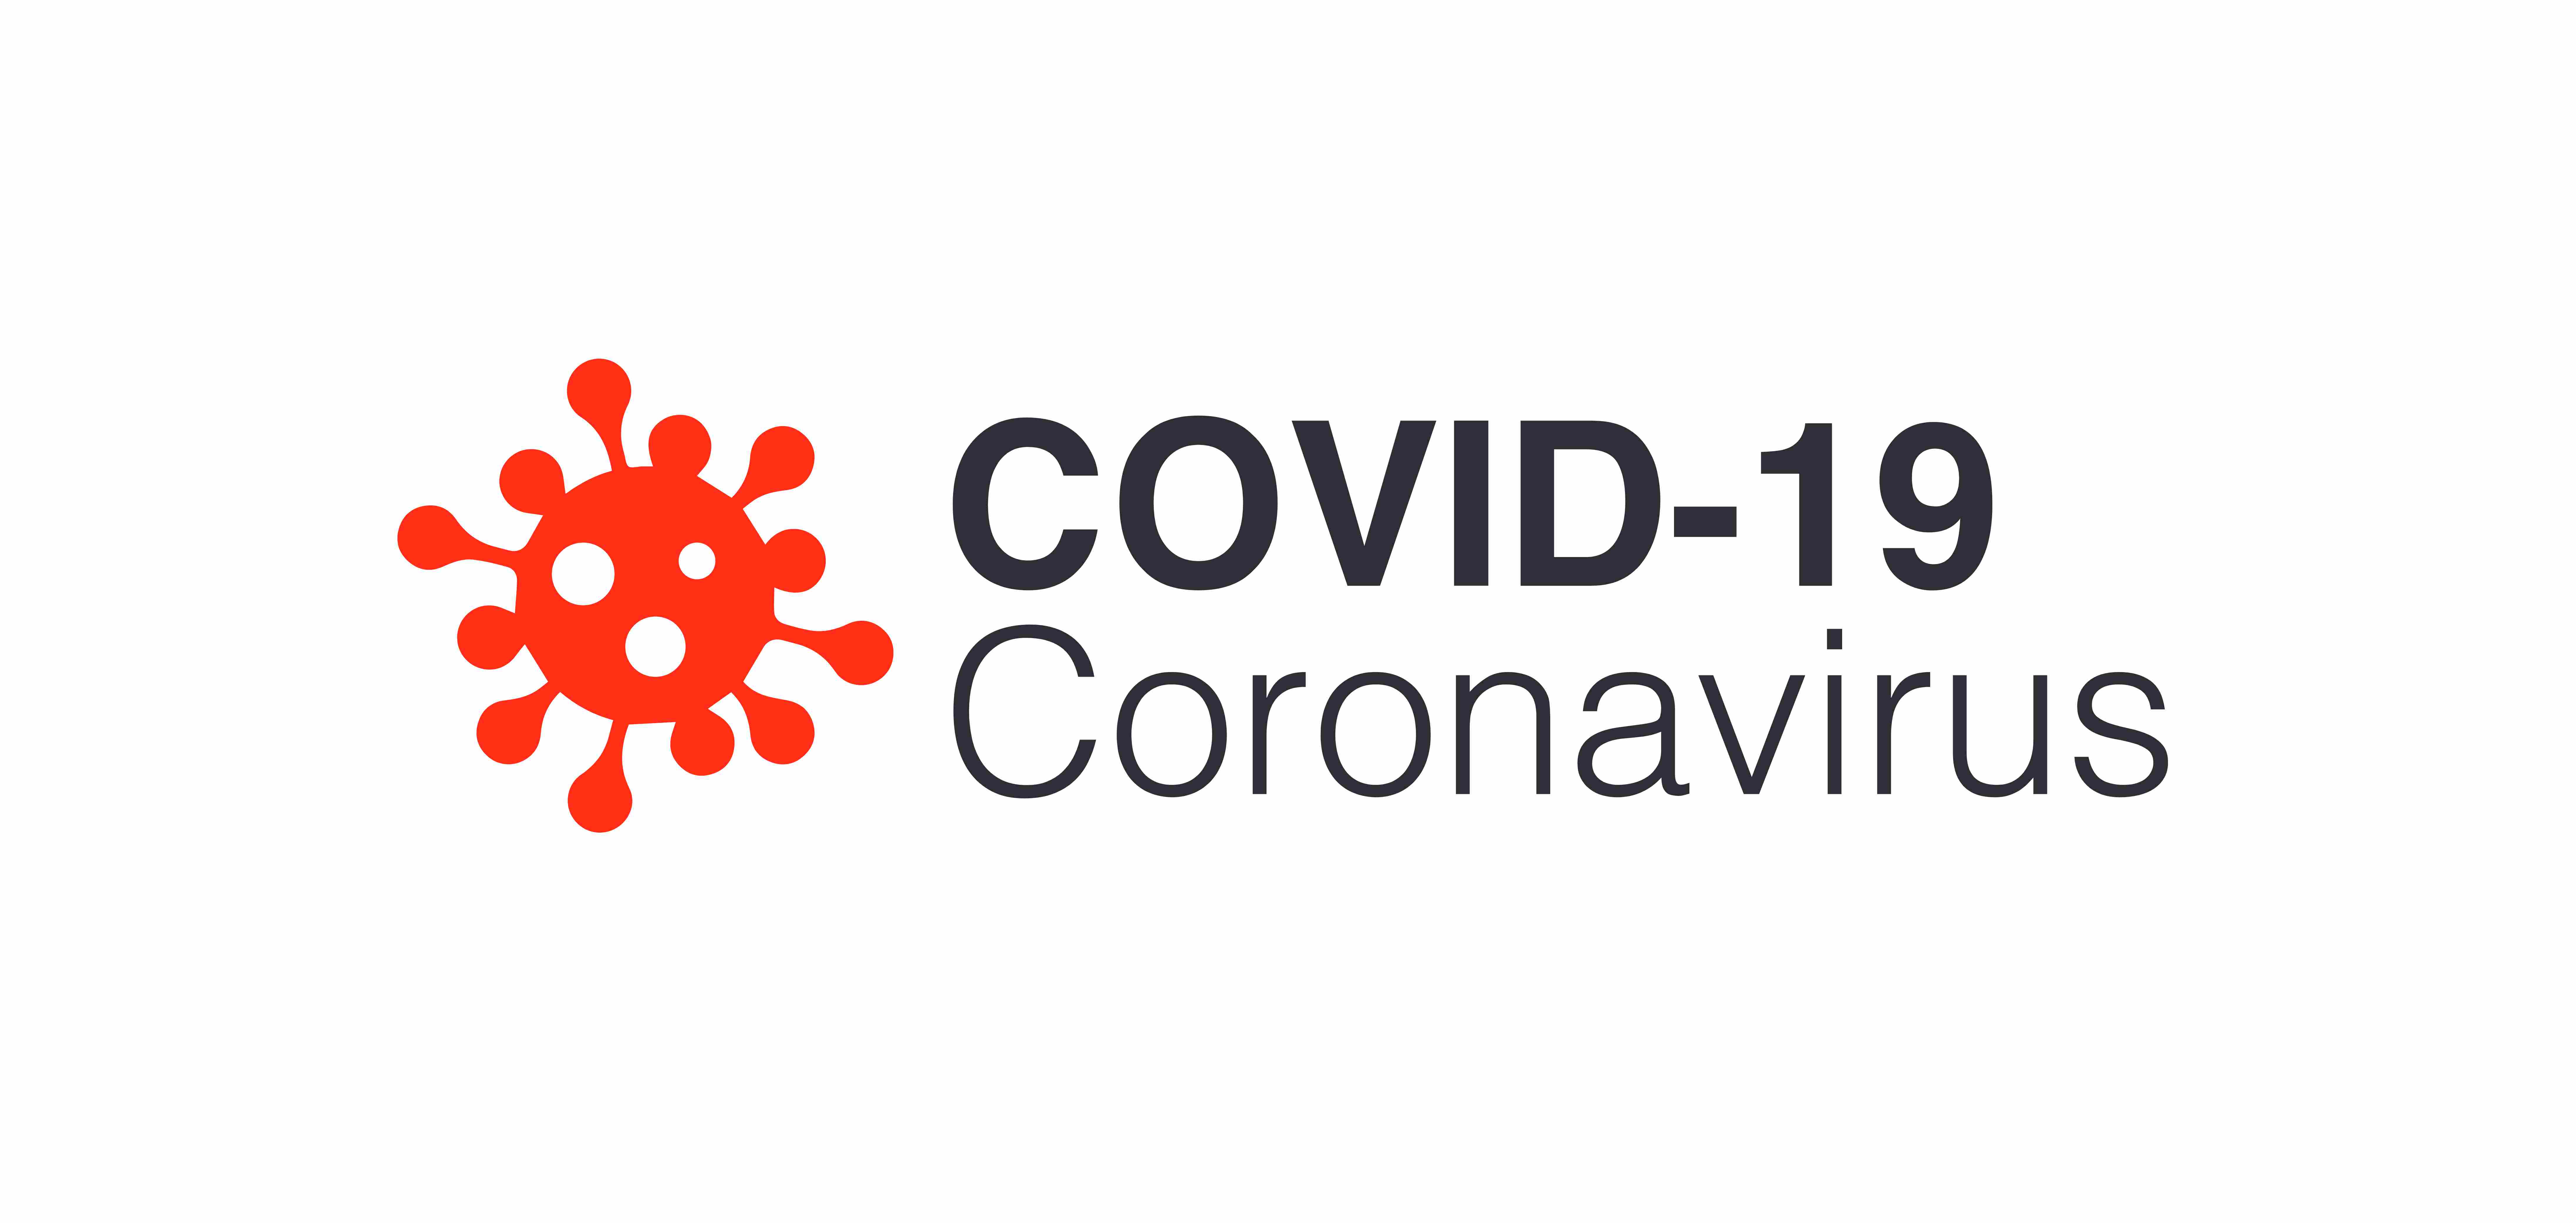 Response to Covid-19 Virus